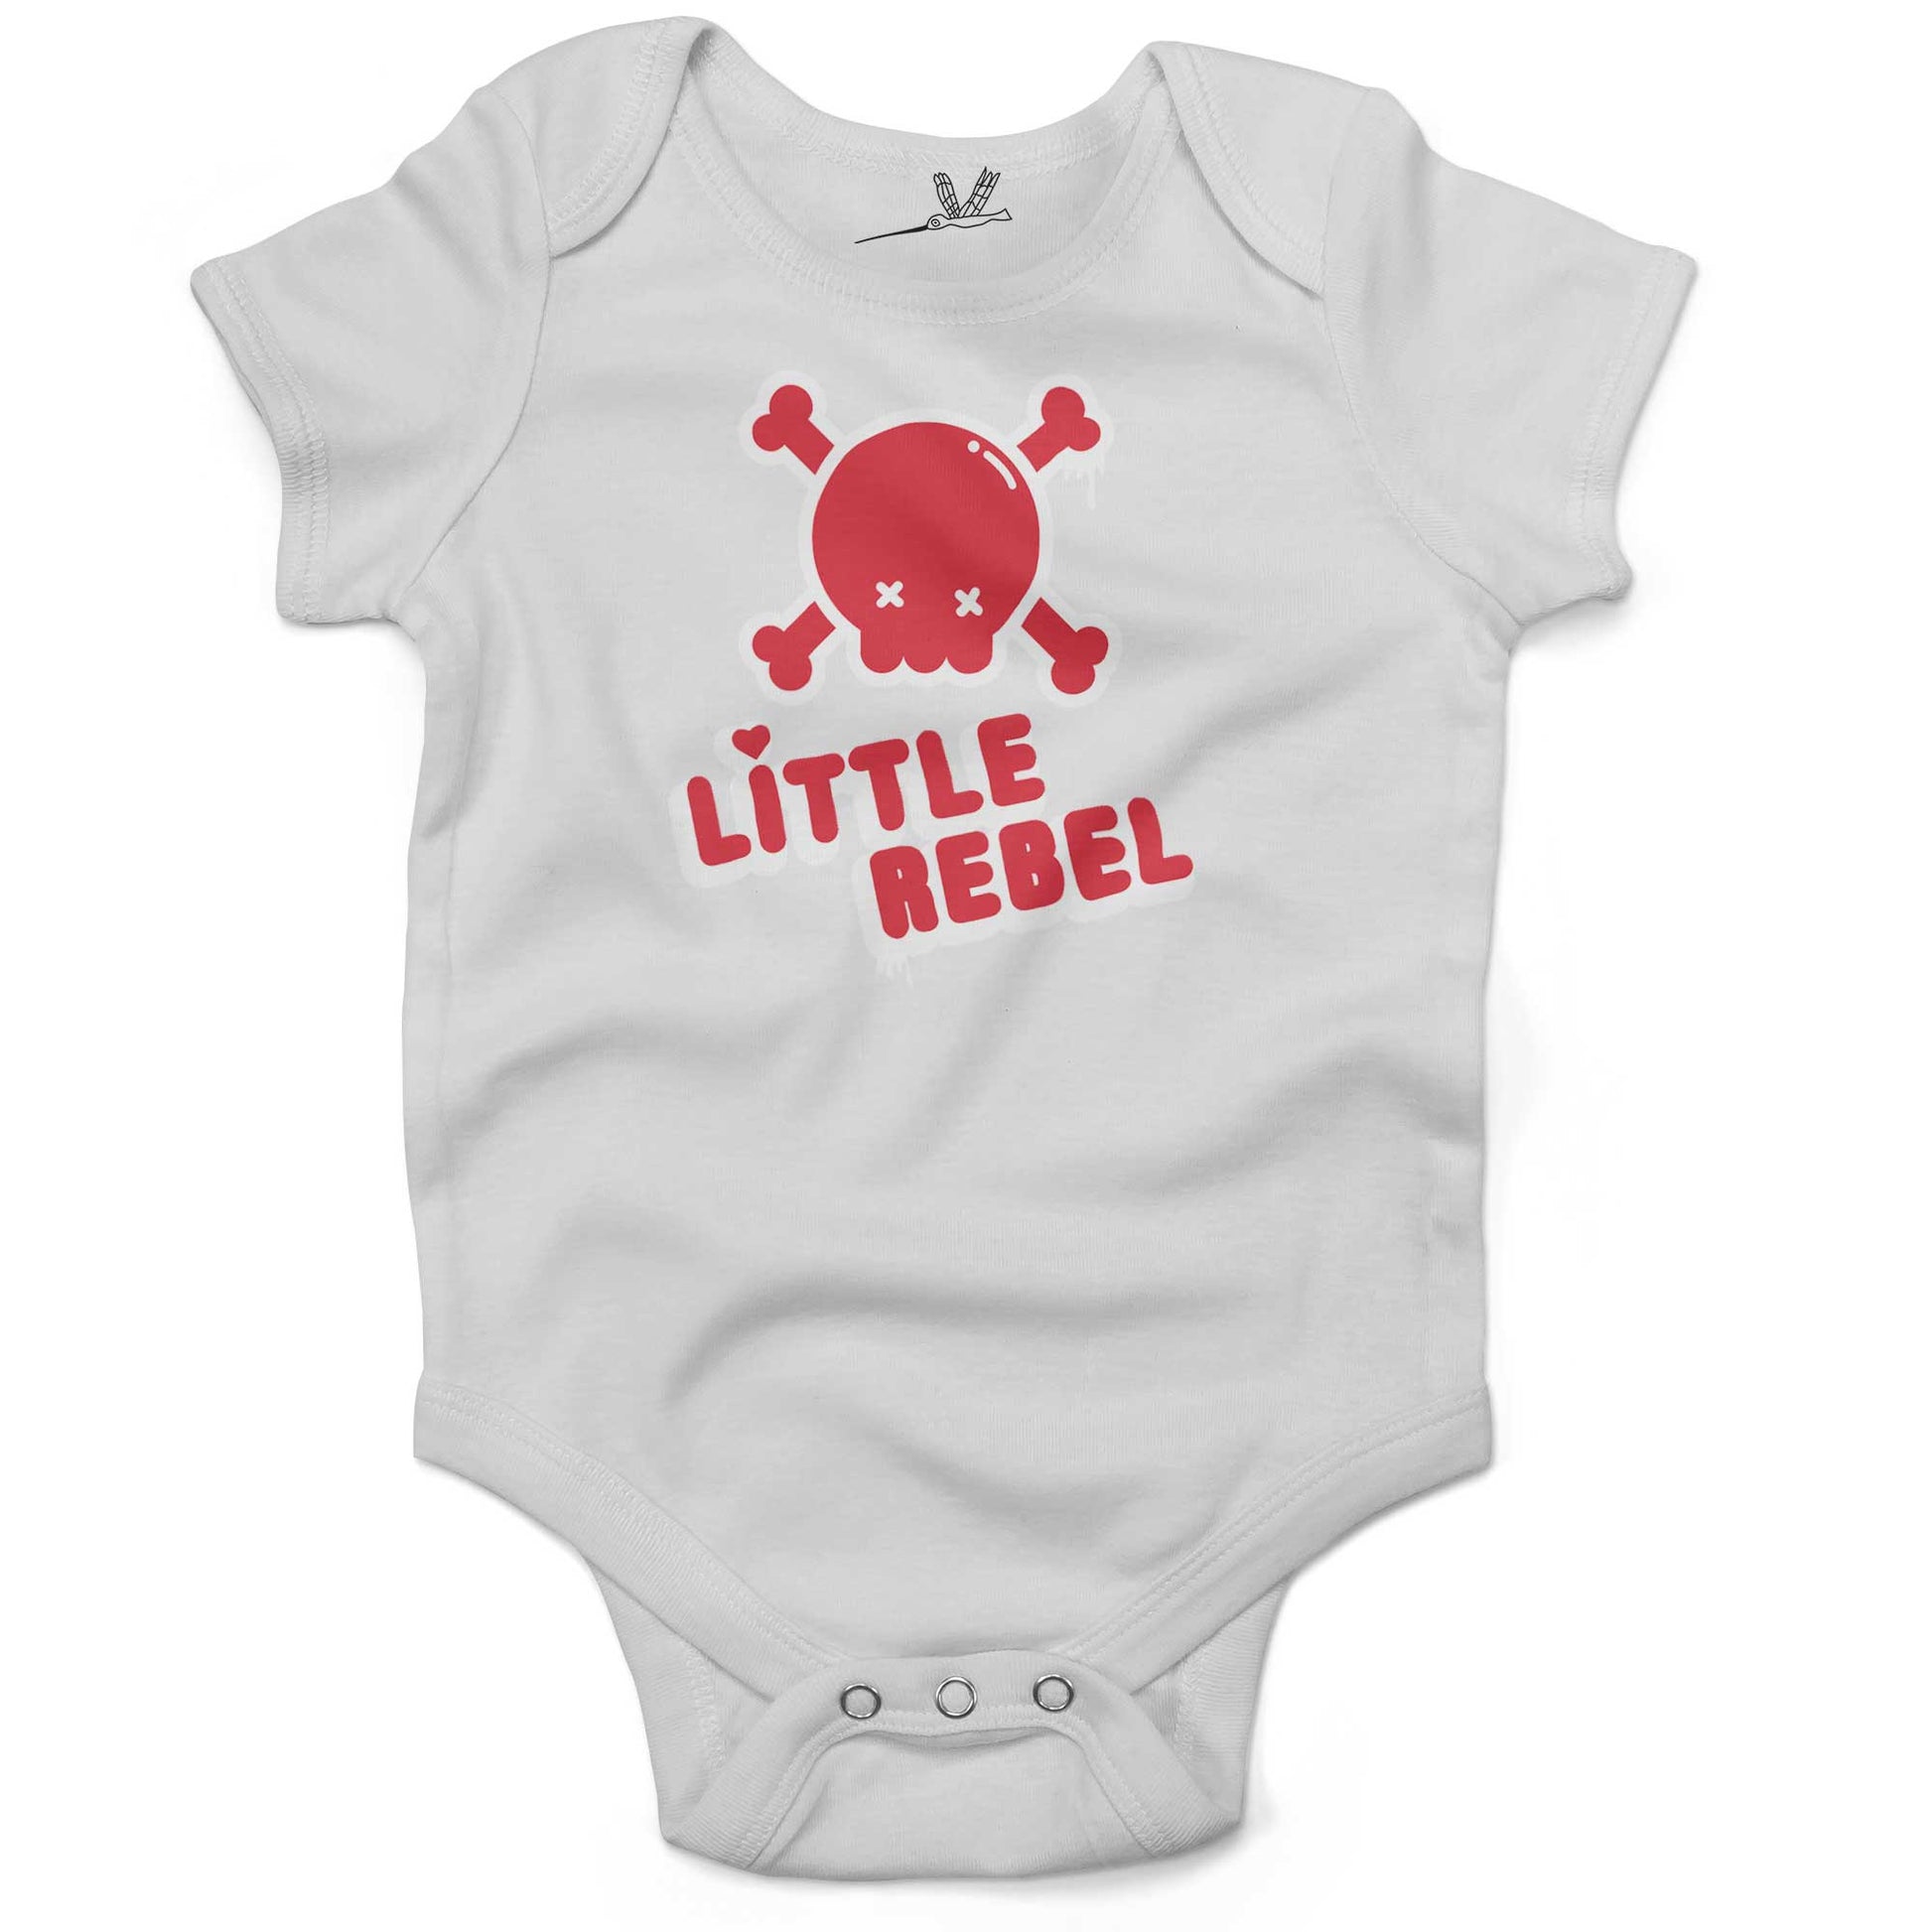 Little Rebel Infant Bodysuit or Raglan Baby Tee-White-3-6 months